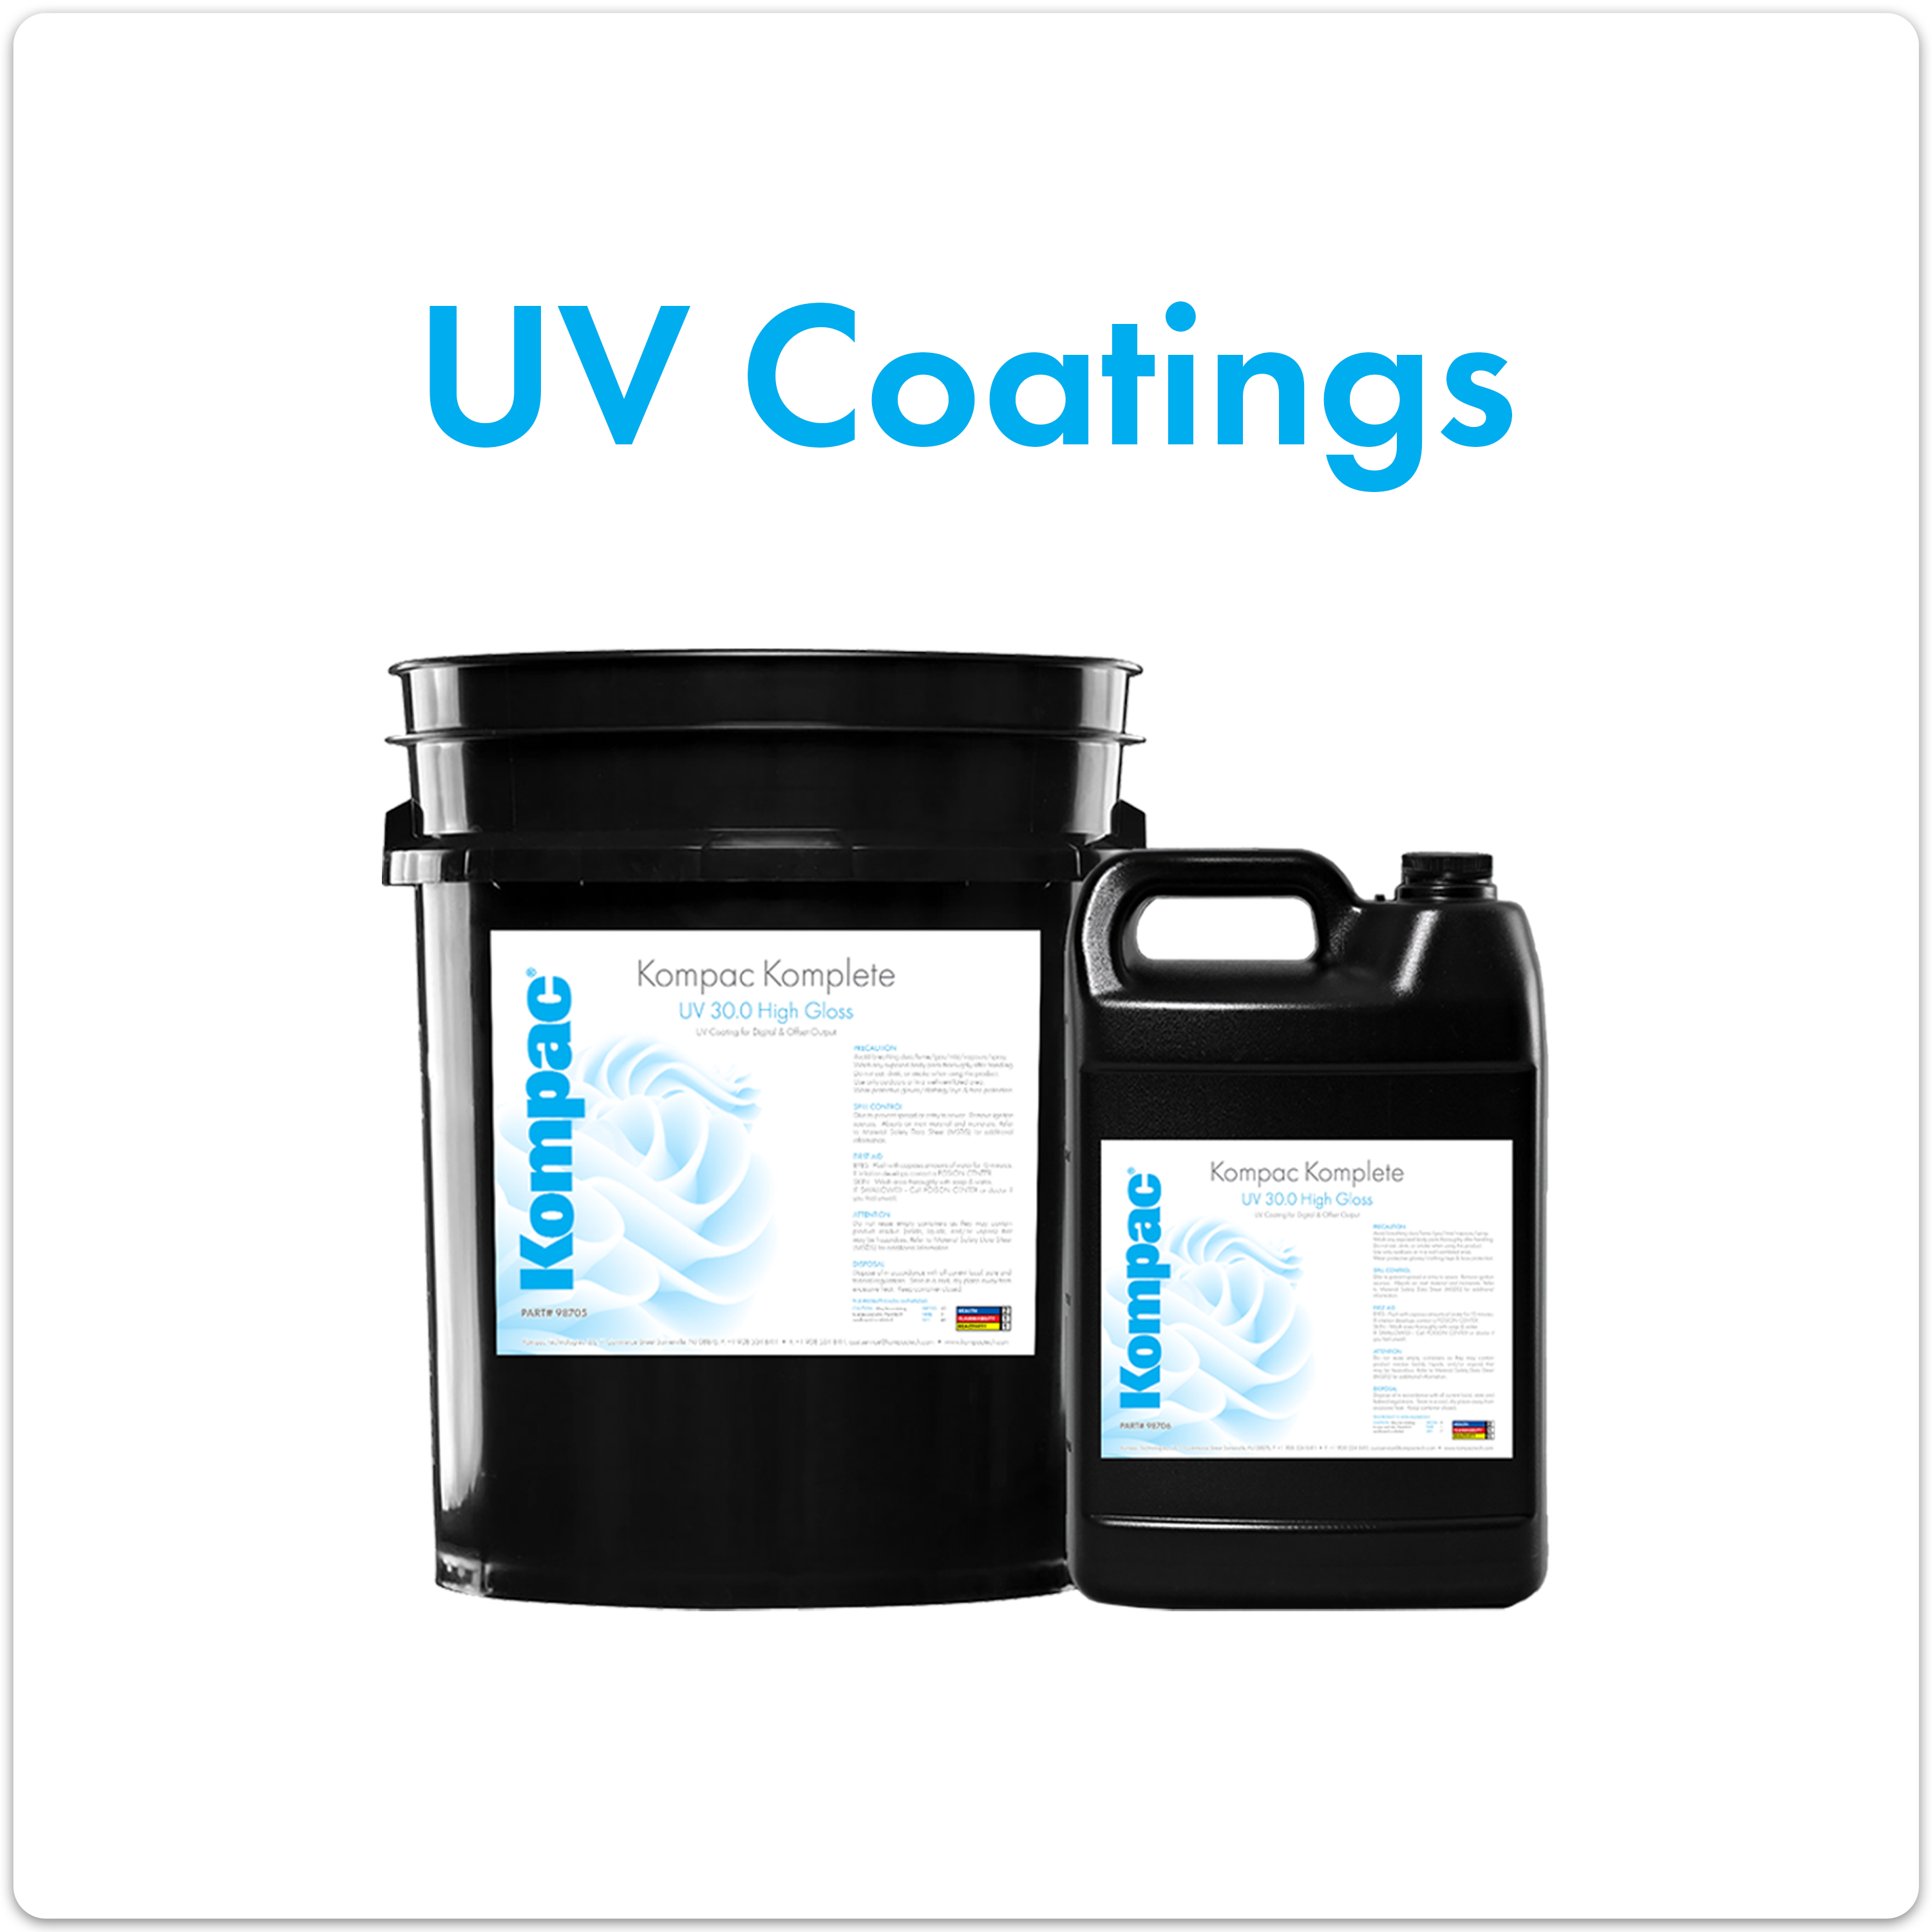 UV Coatings – Kompac